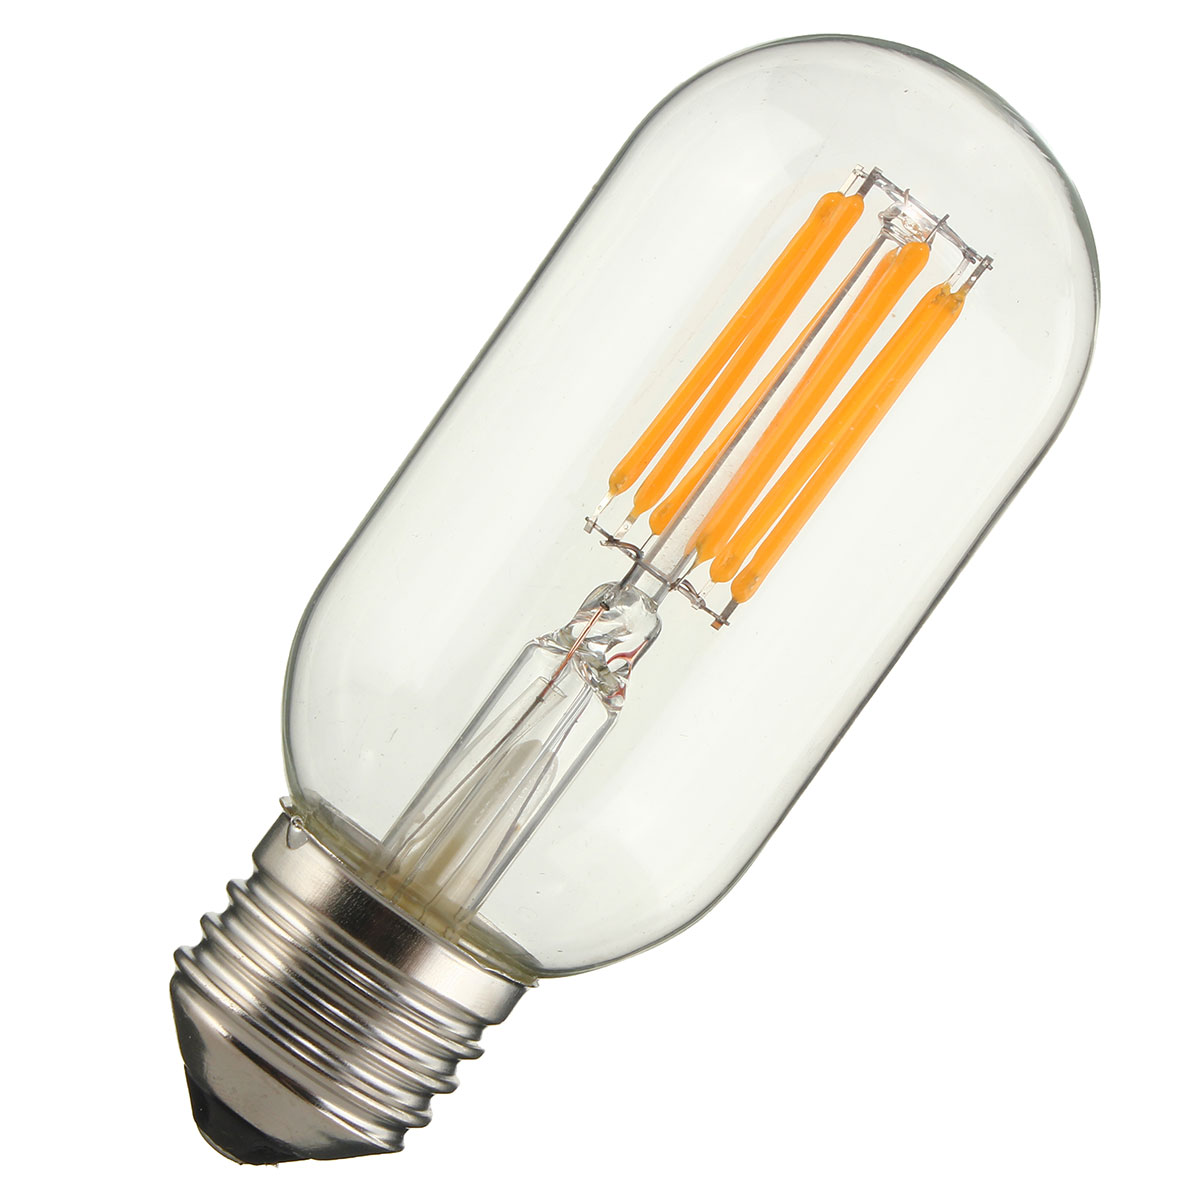 Dimmable-E27-E26-T45-6W-COB-Incandescent-Warm-White-Edsion-Restro-Light-Lamp-Bulb-AC110V-AC220V-1074235